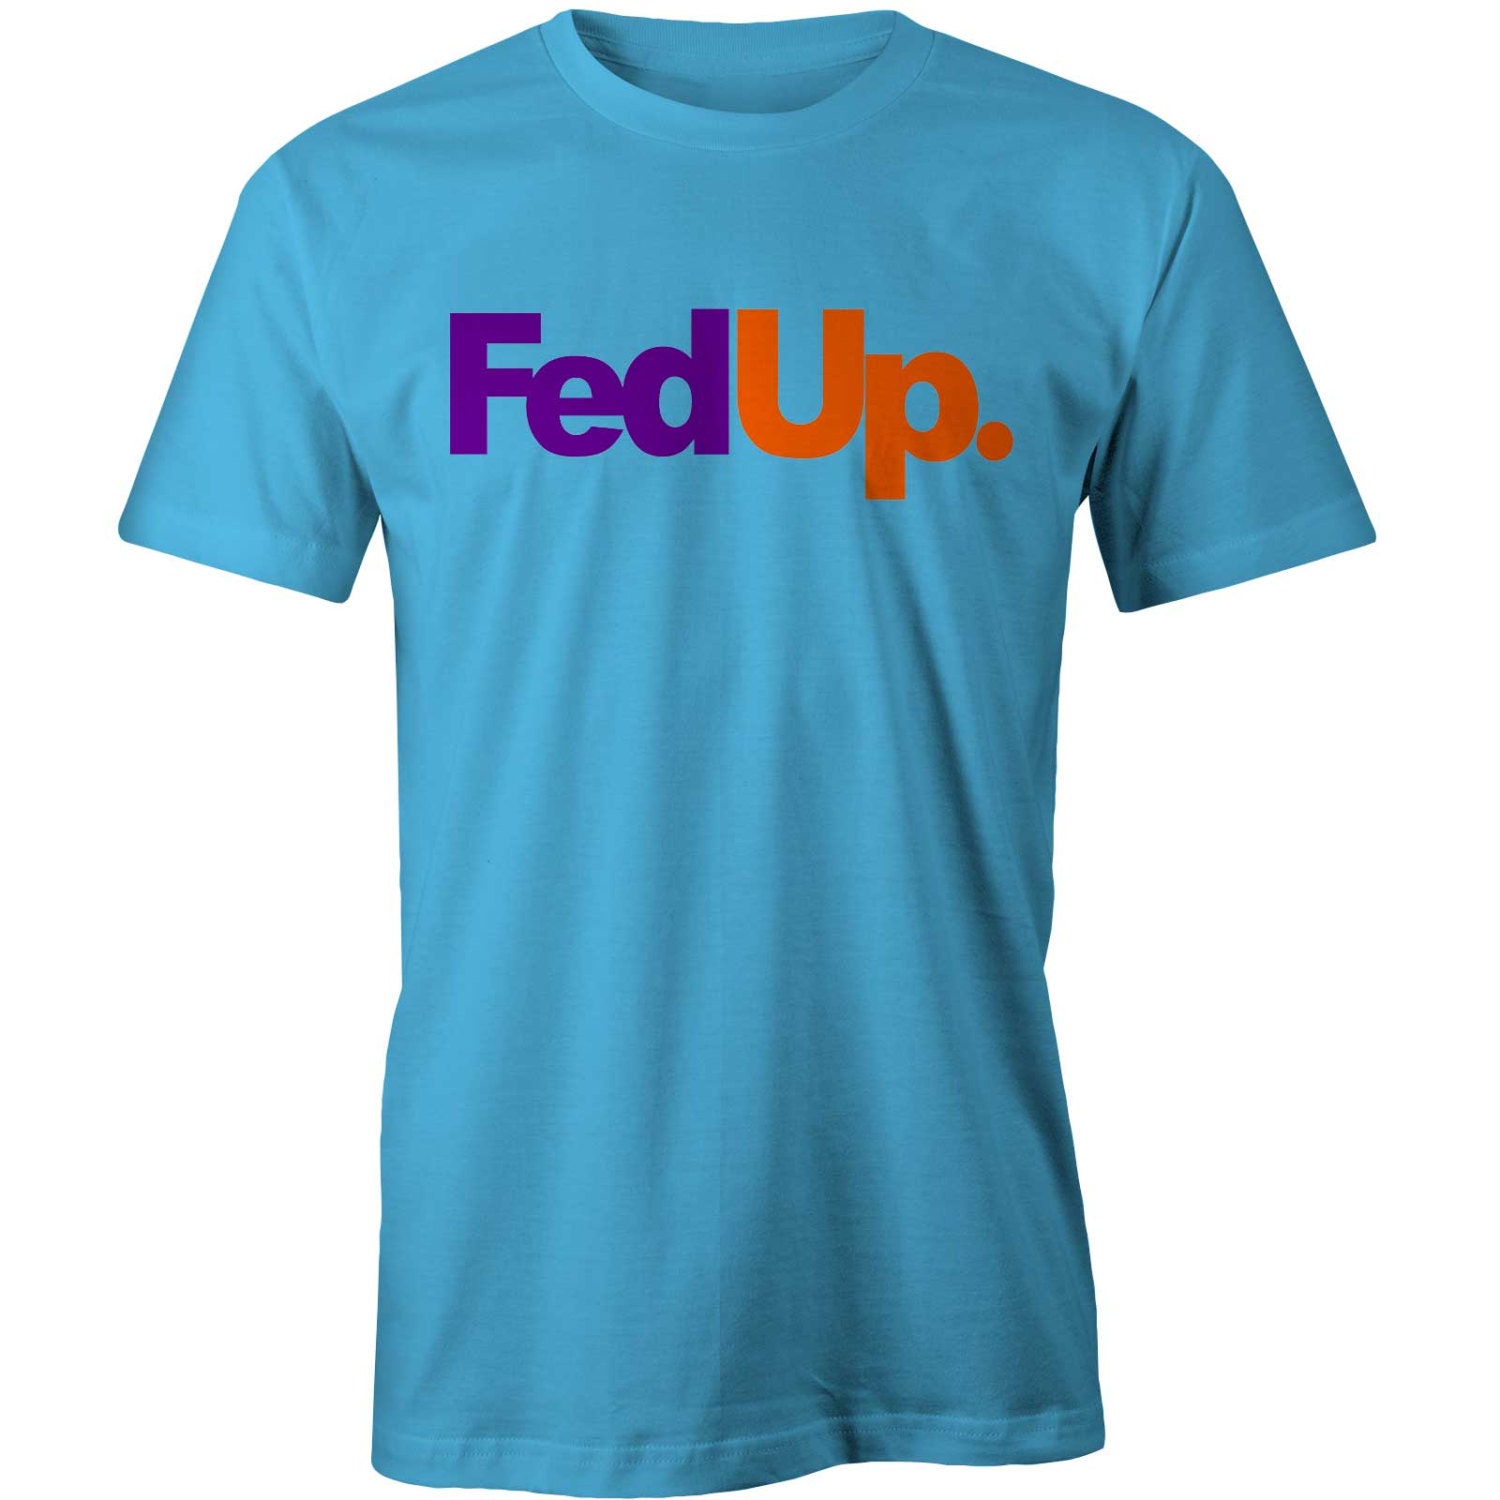 FEDUP T-shirt Funny Fedex Parody Mood Slogan Tee